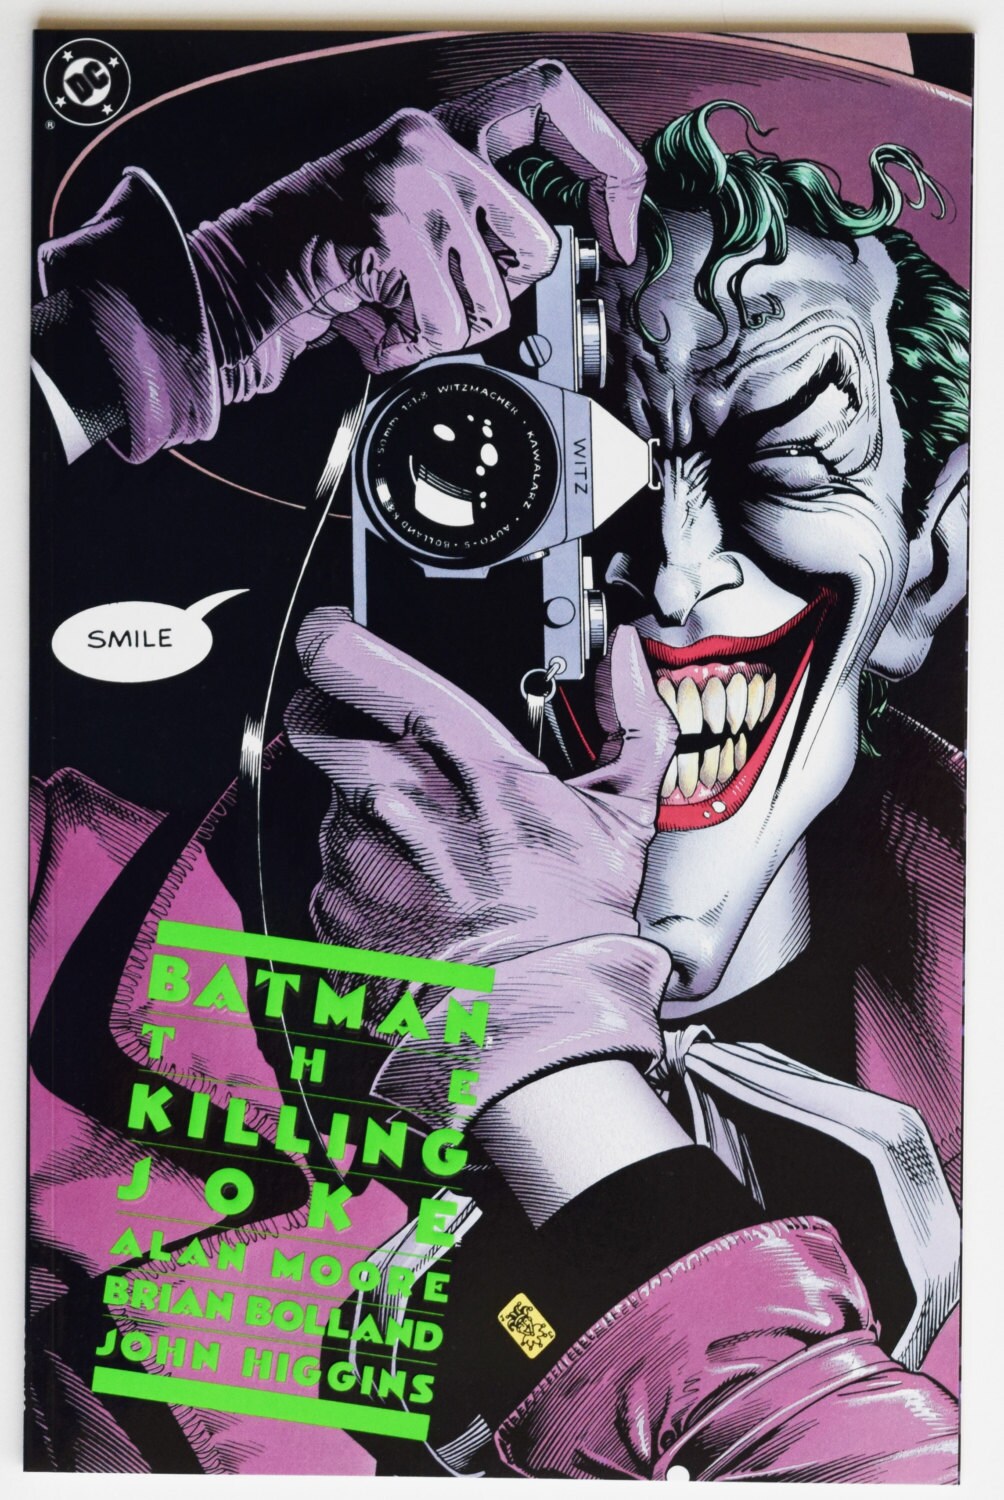 batman the killing joke